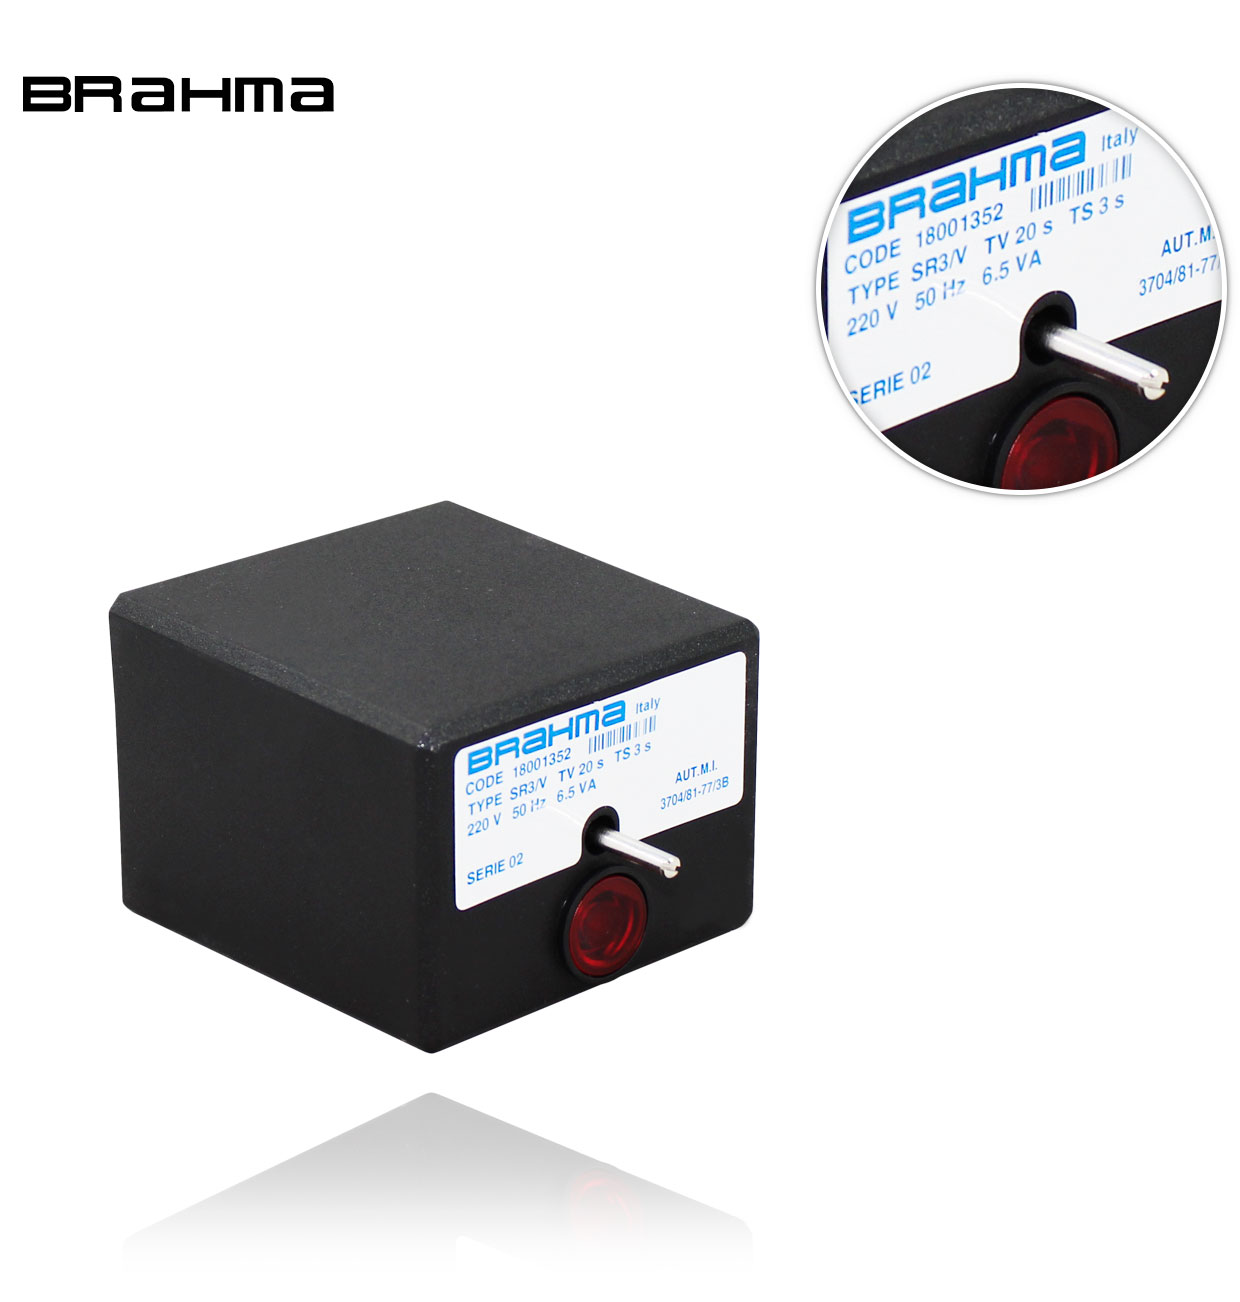 SR3/V  TW20 TS3 220/50 BRAHMA CONTROL BOX DEVICE